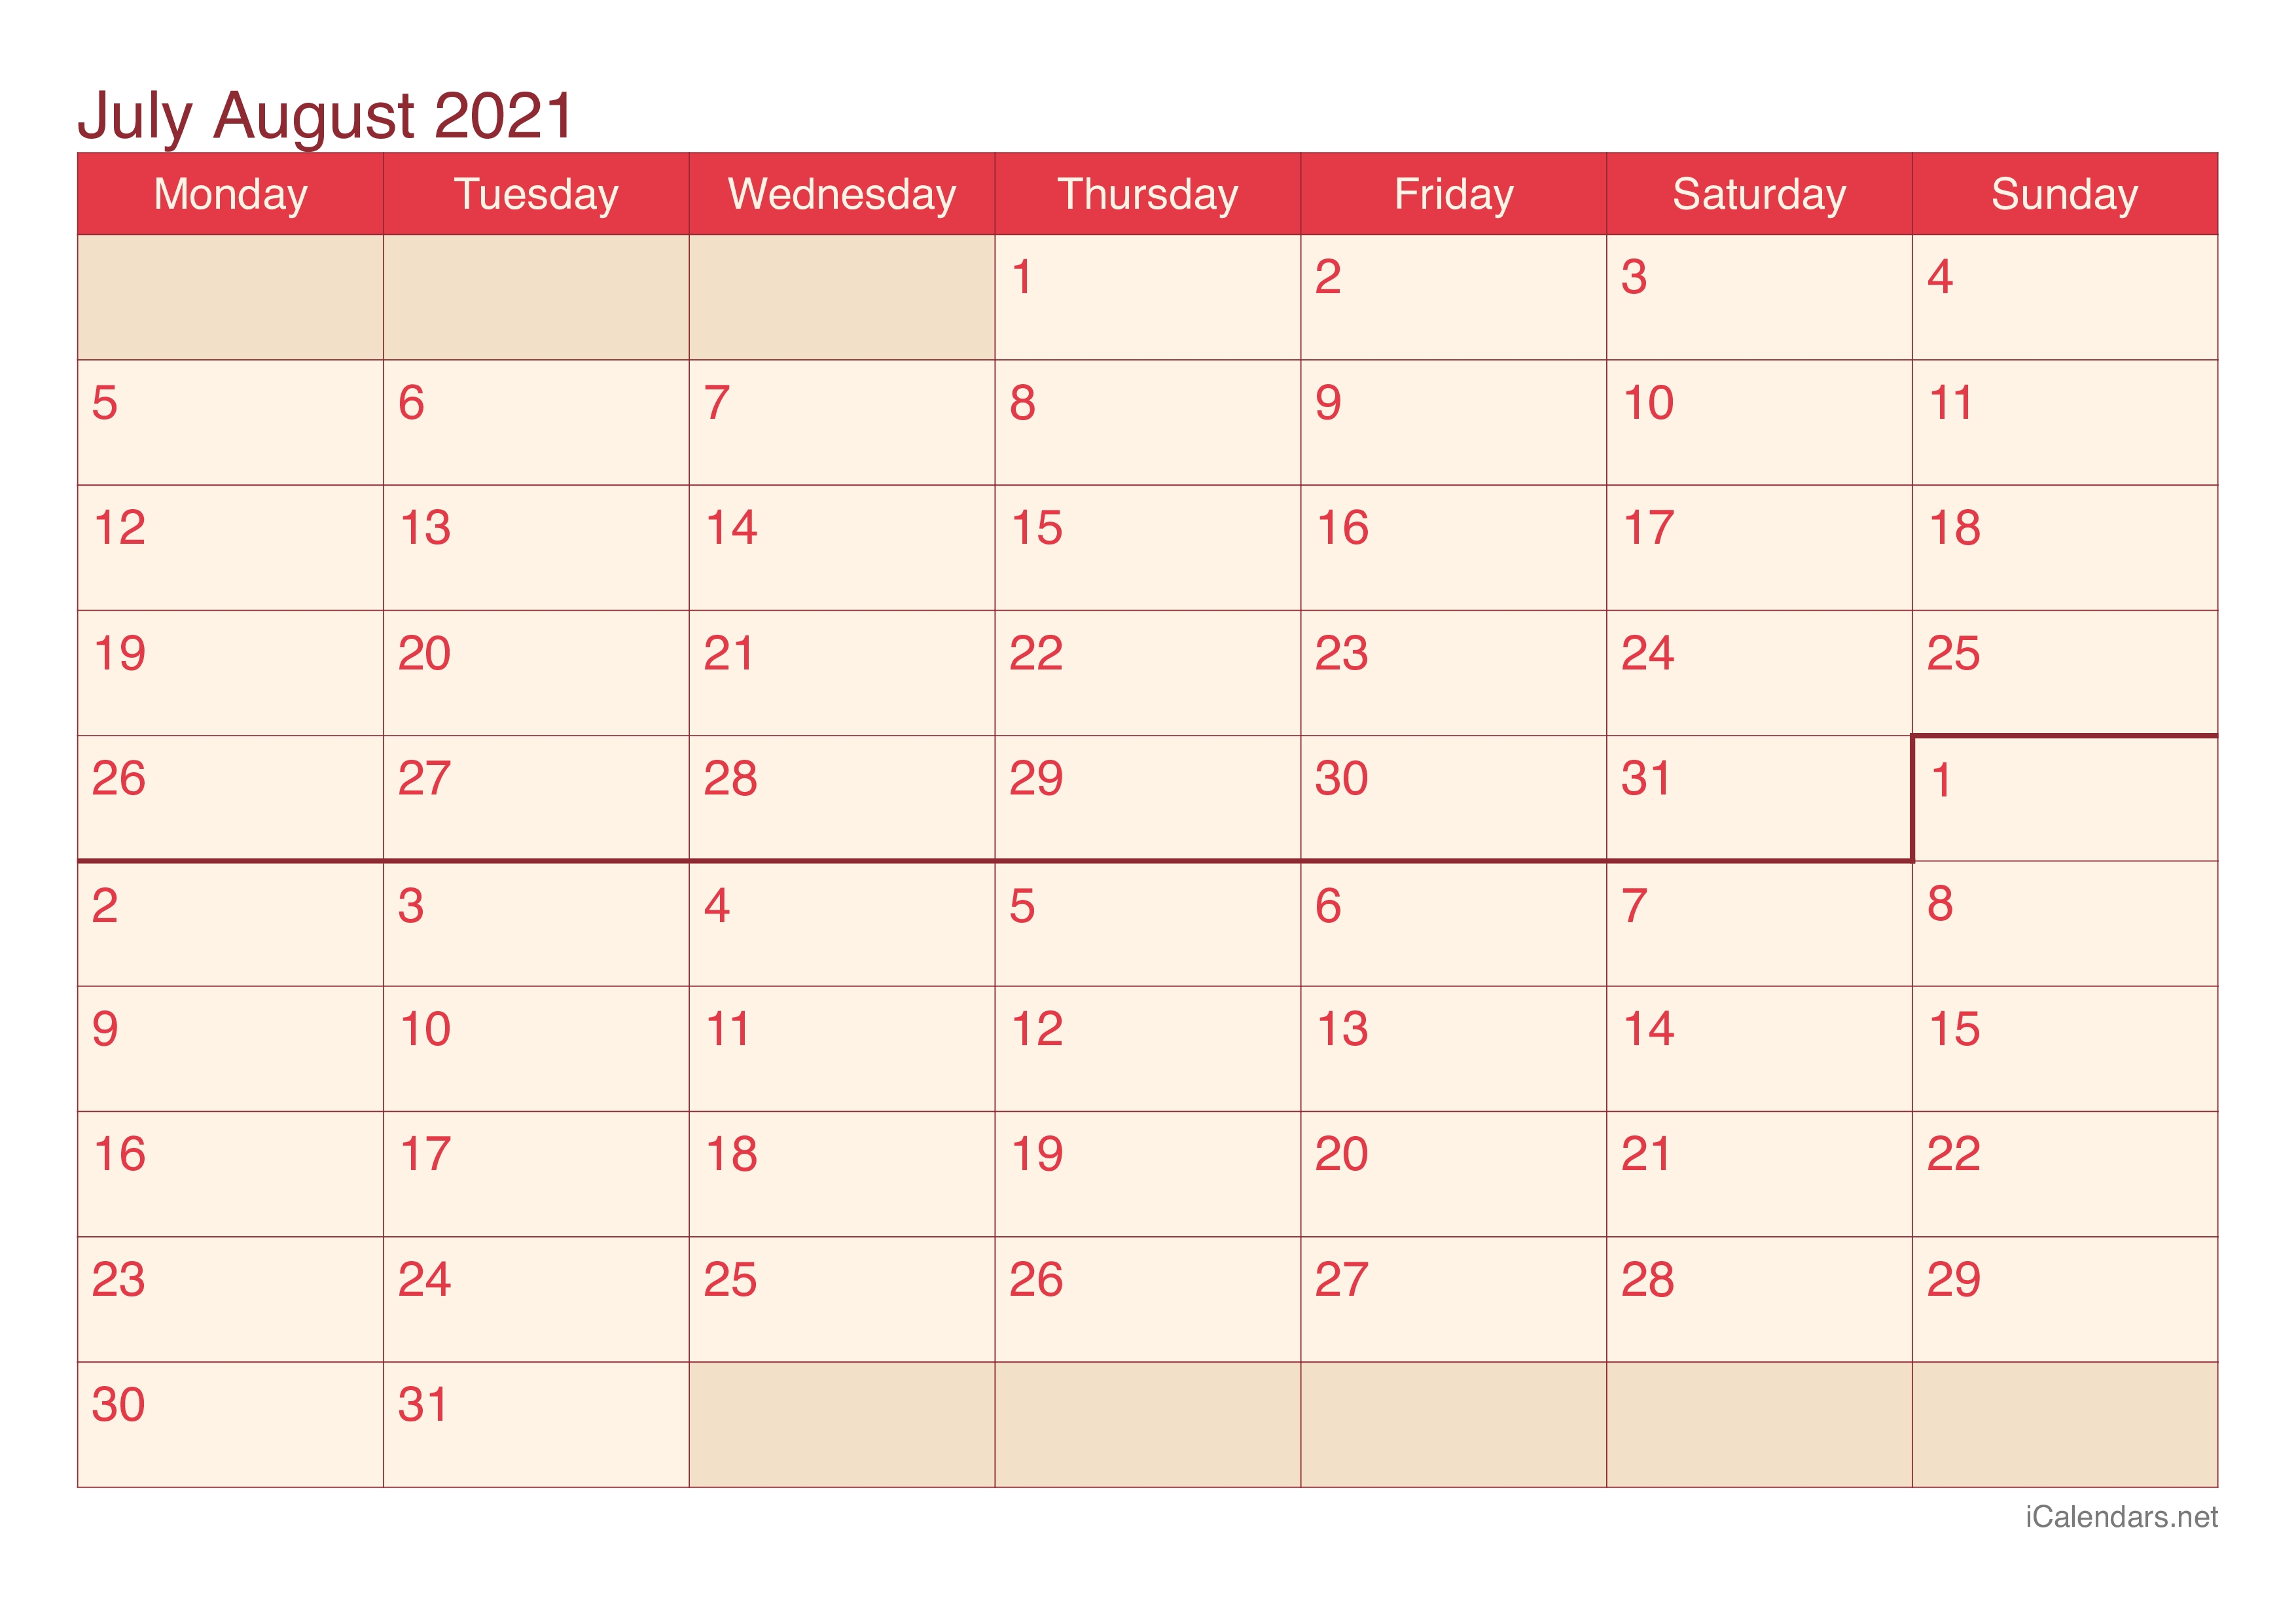 July And August 2021 Printable Calendar - Icalendars July Aug Sept 2021 Calendar